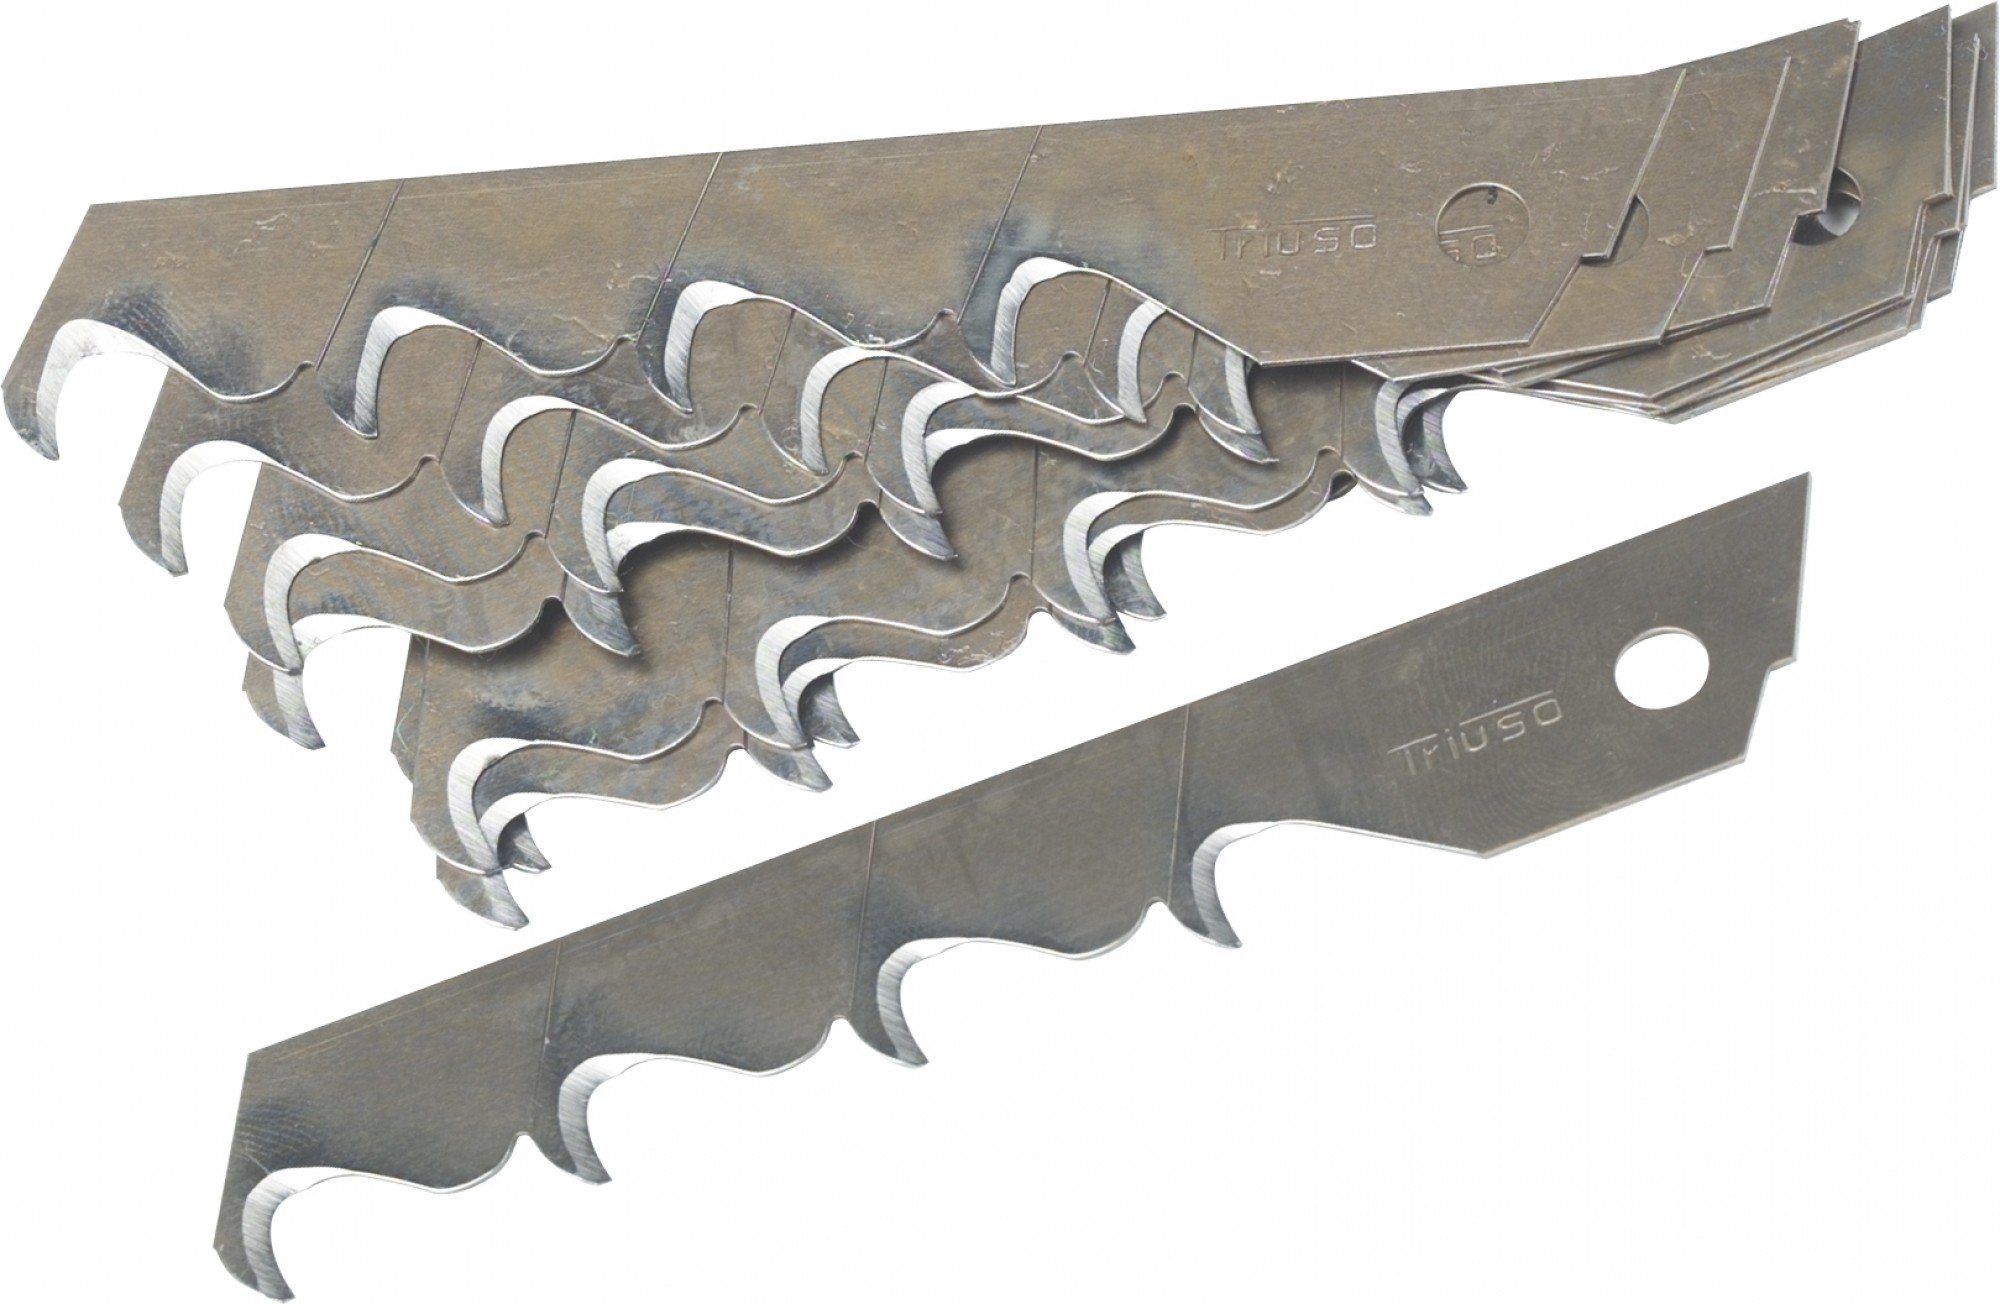 Triuso Cuttermesser Hakenklingen Abbrechklingen 100mm x 18mm, (50 Stück),  in Vorratsbox